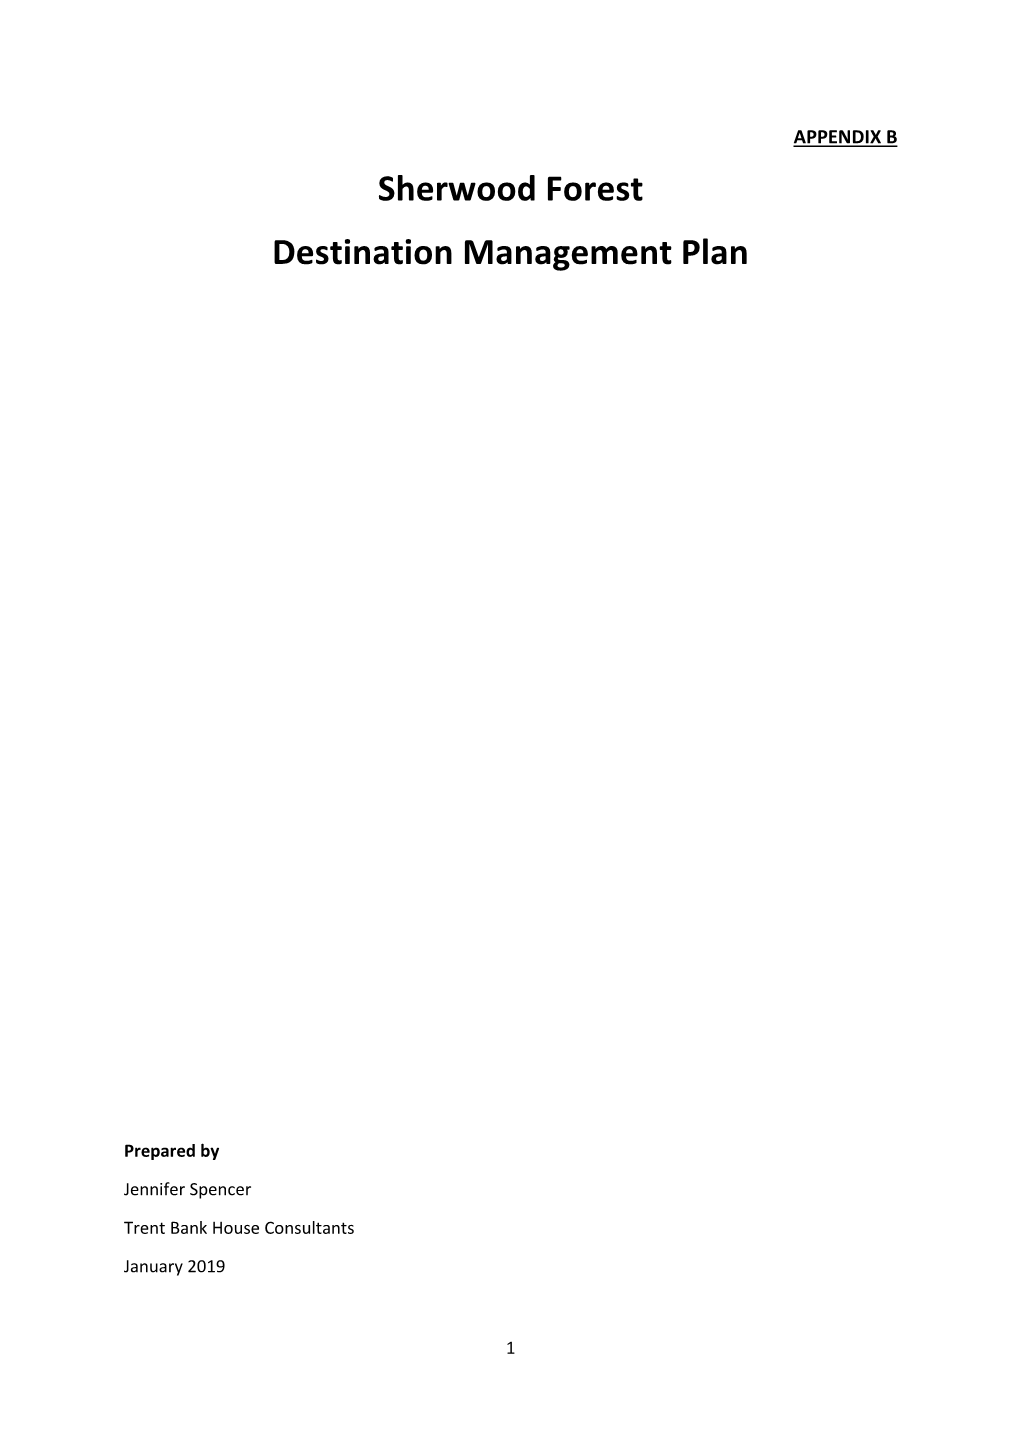 Sherwood Forest Destination Management Plan